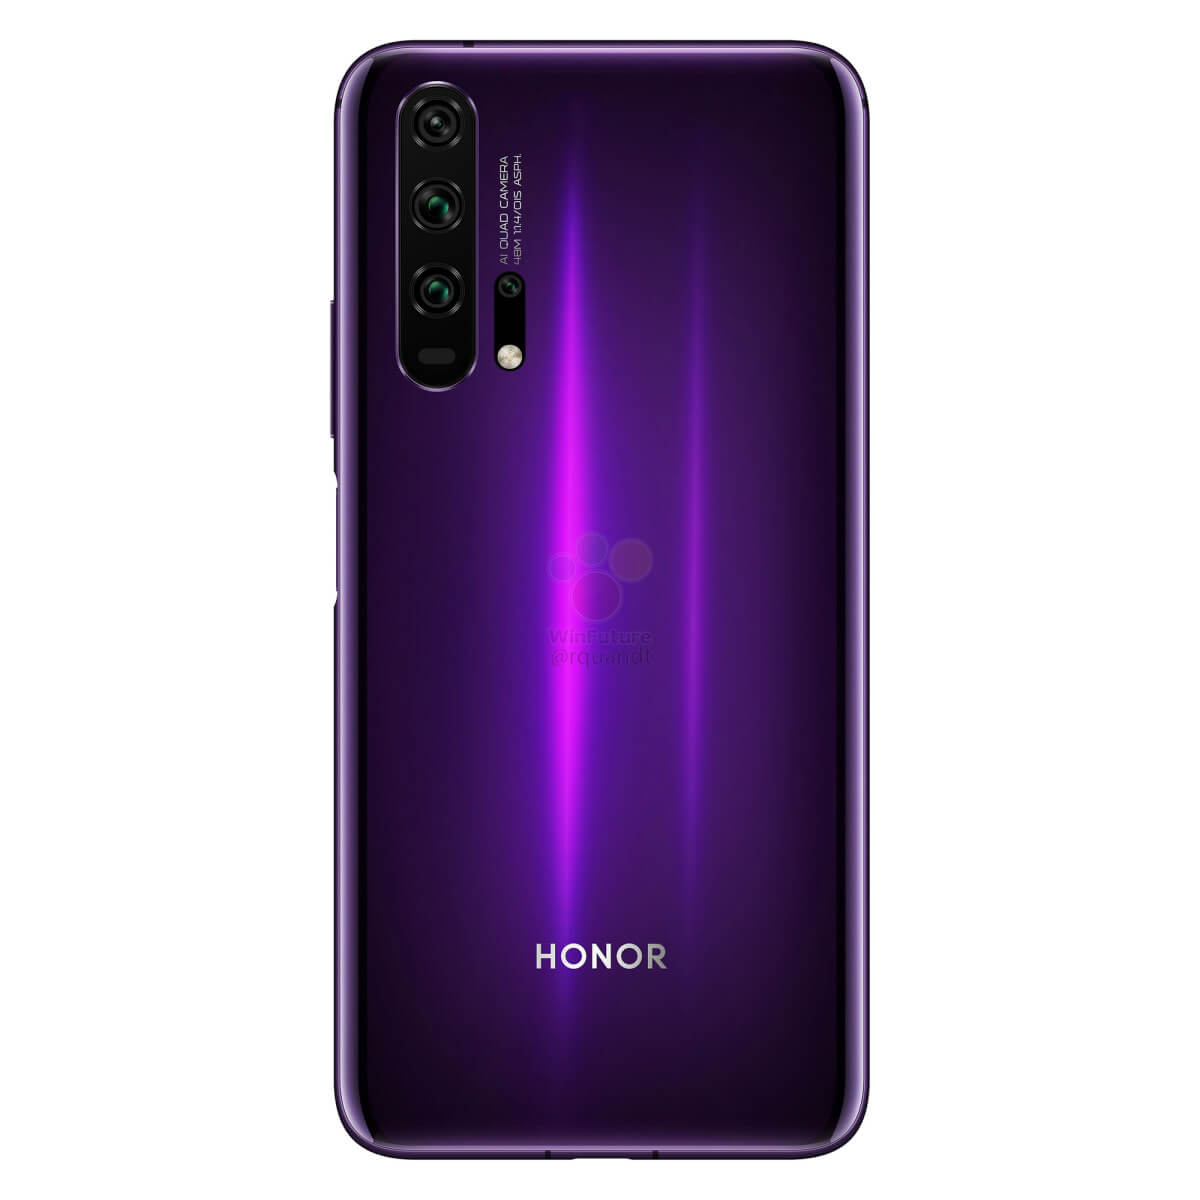 Представлены смартфоны Honor 20 и Honor 20 Pro